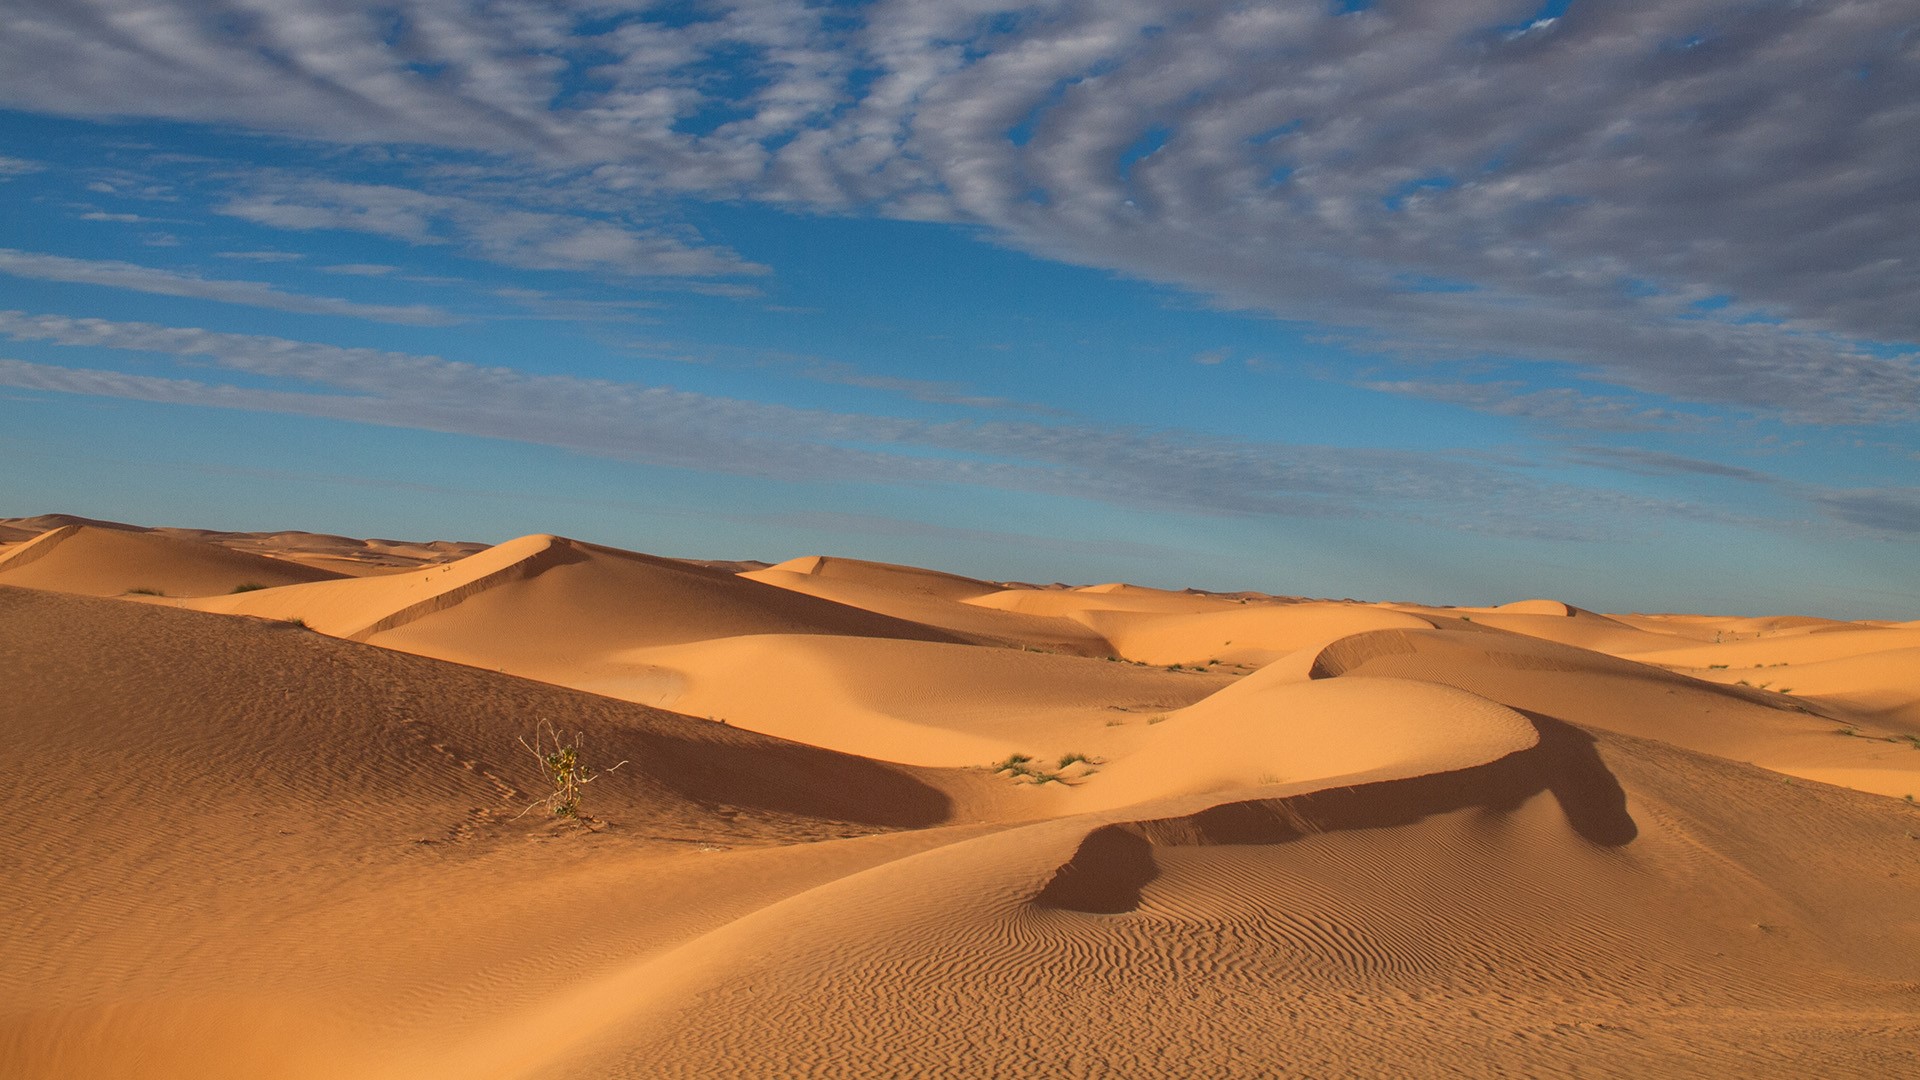 General 1920x1080 nature landscape desert plants sand clouds sky sand ripples dunes Sahara Egypt